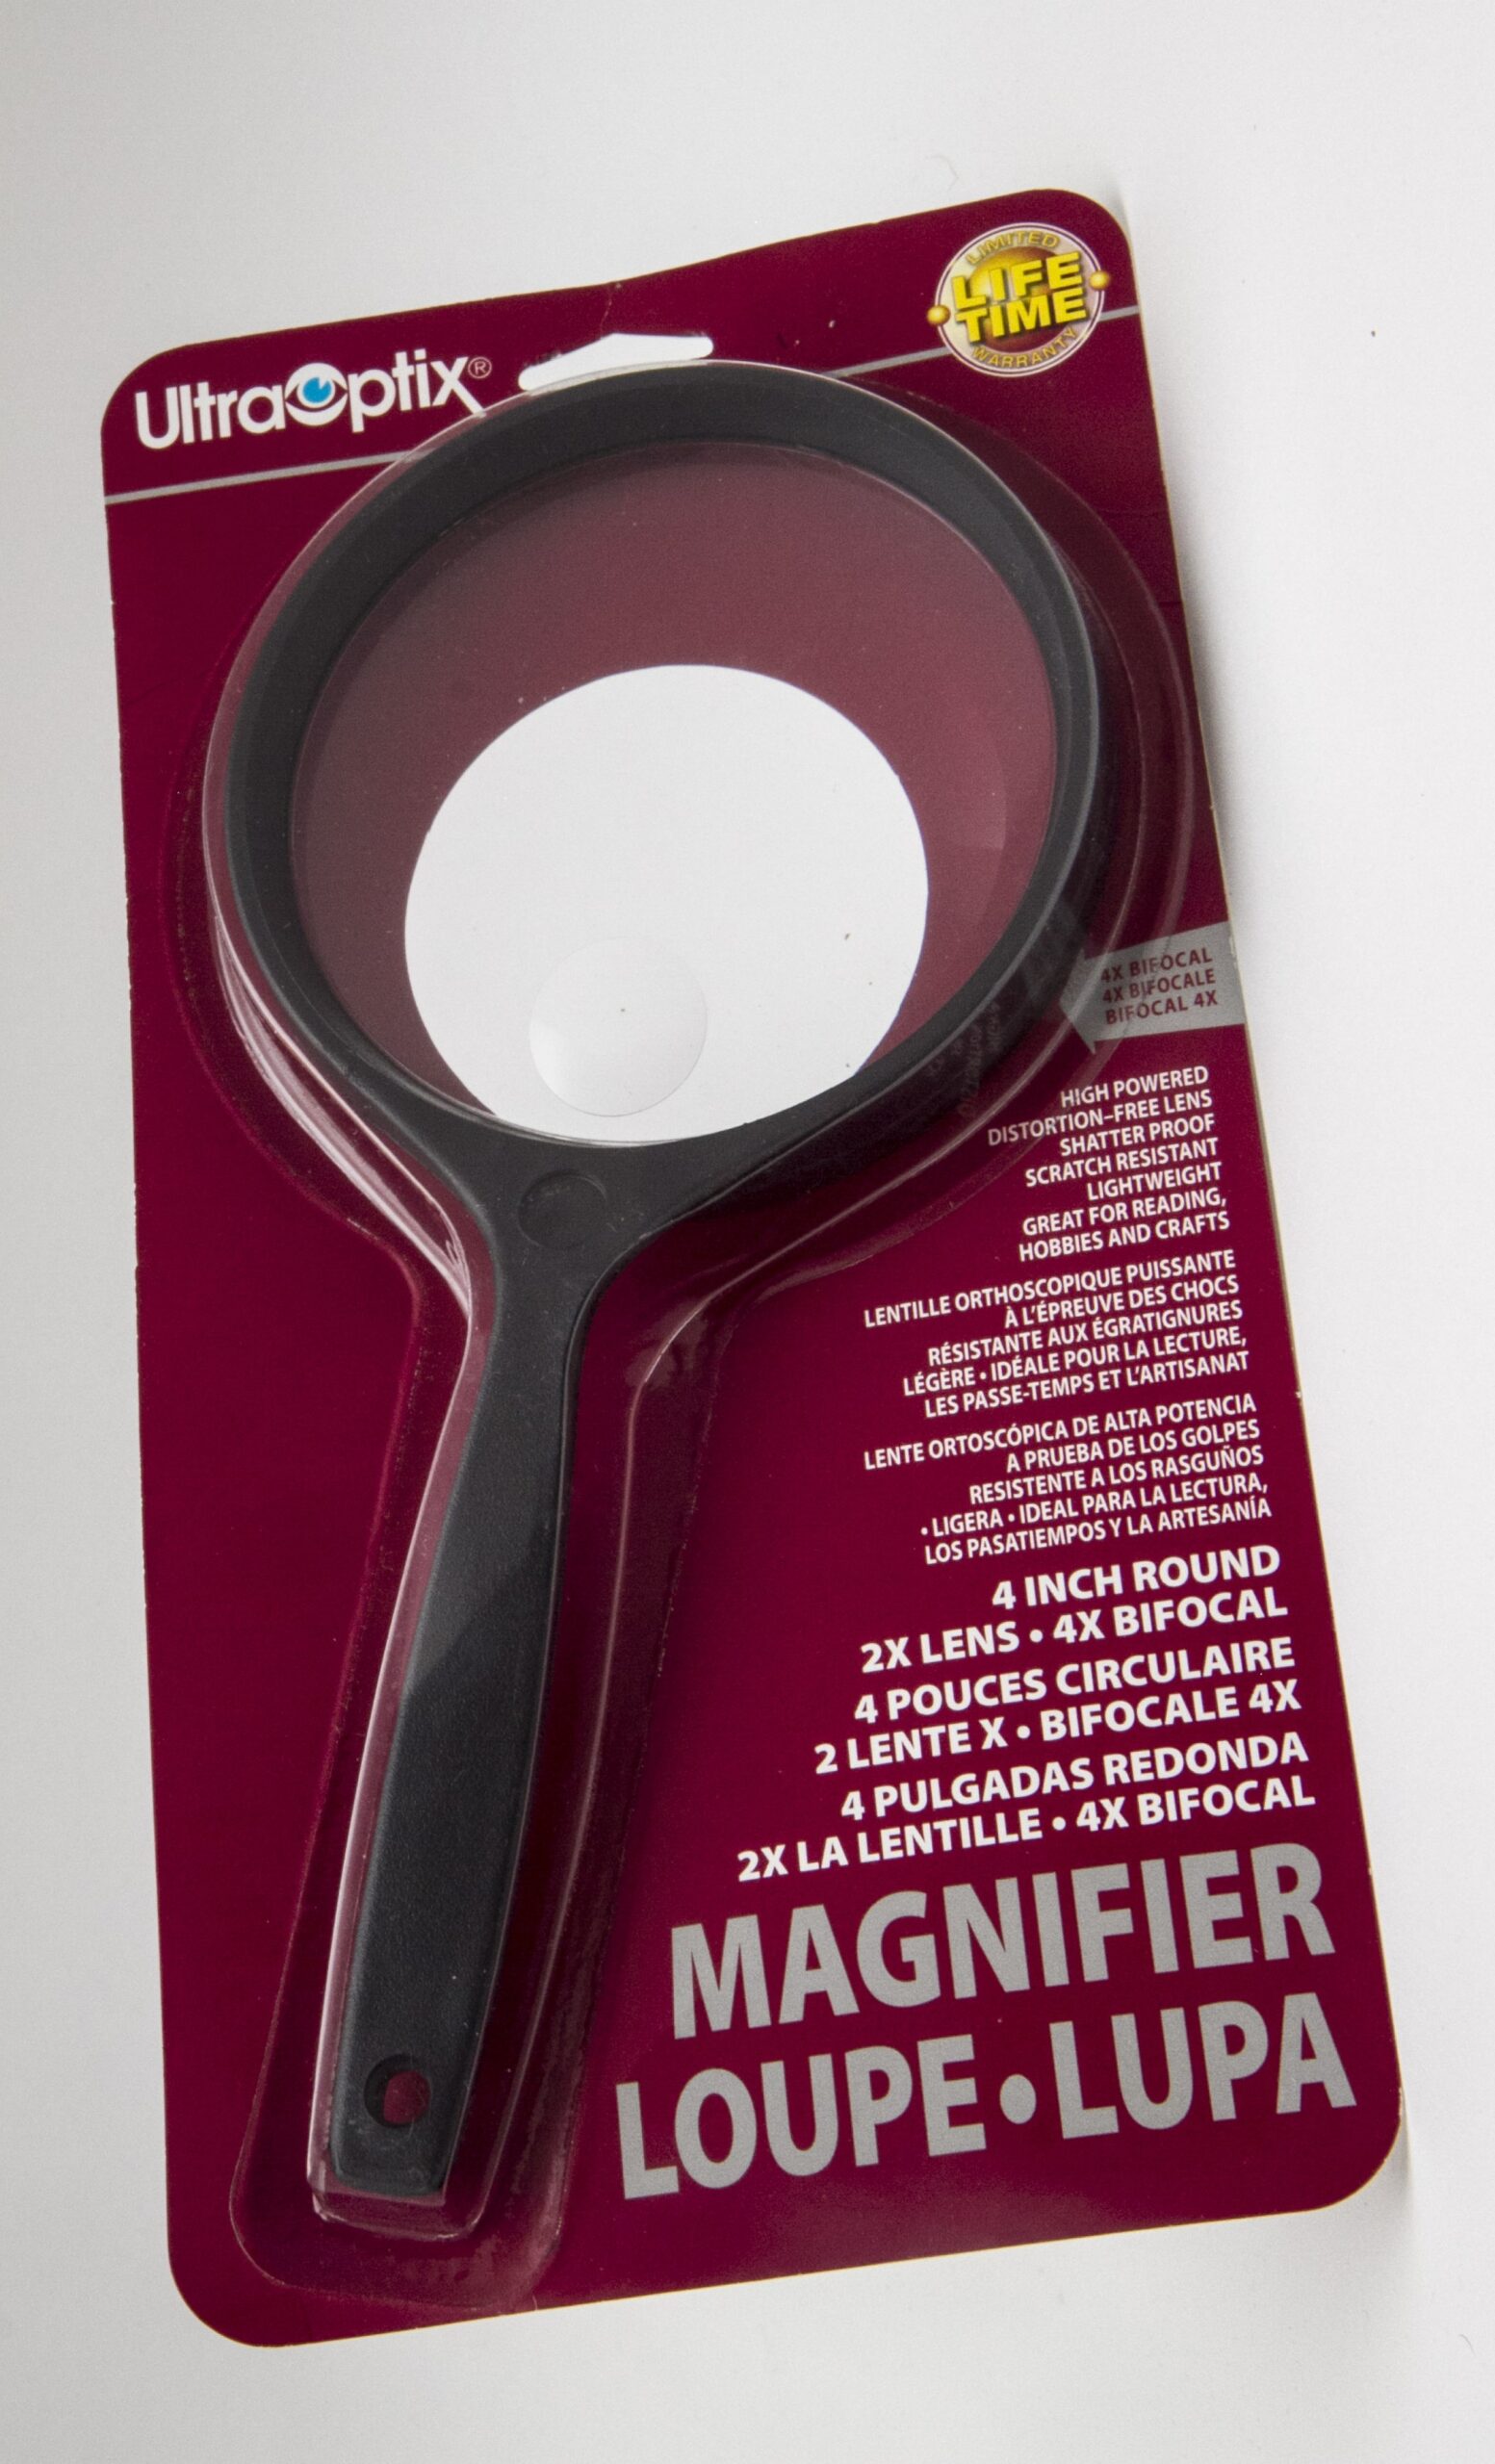 UltraOptix magnifier 2xLens, 4xBifocal